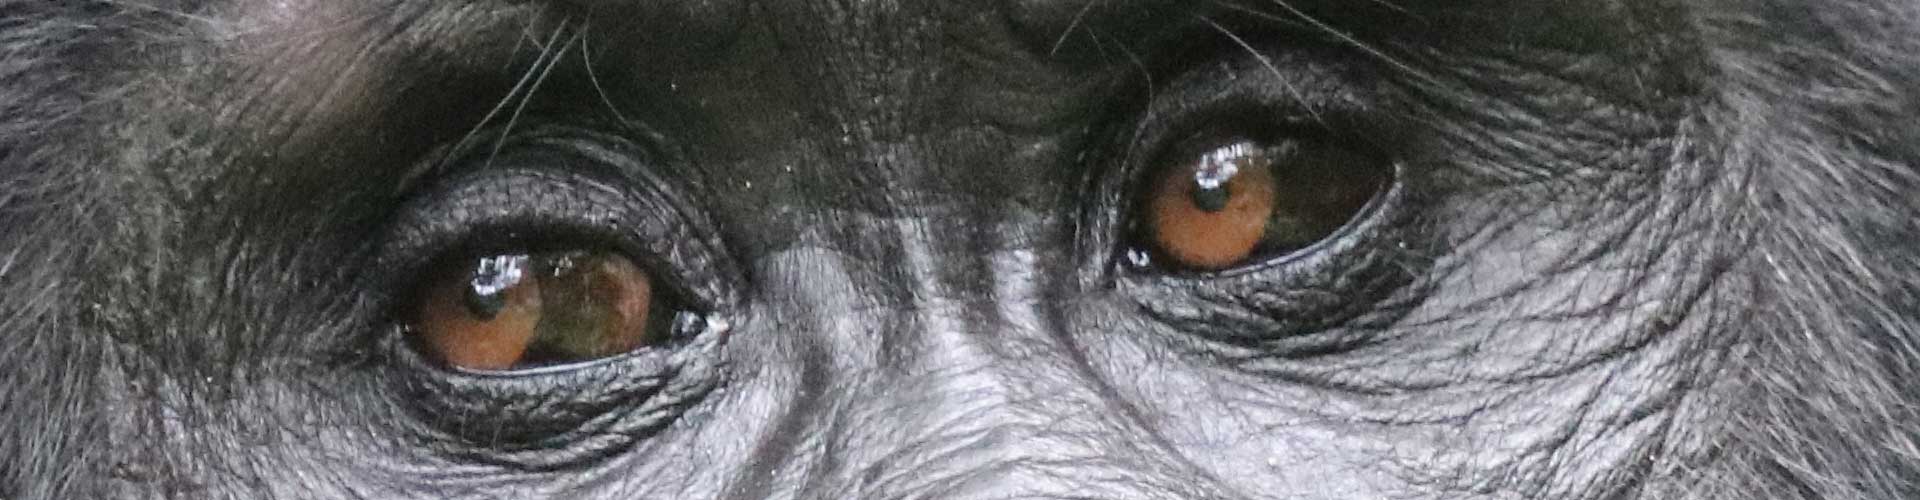 Augen eines Berggorillas in Uganda